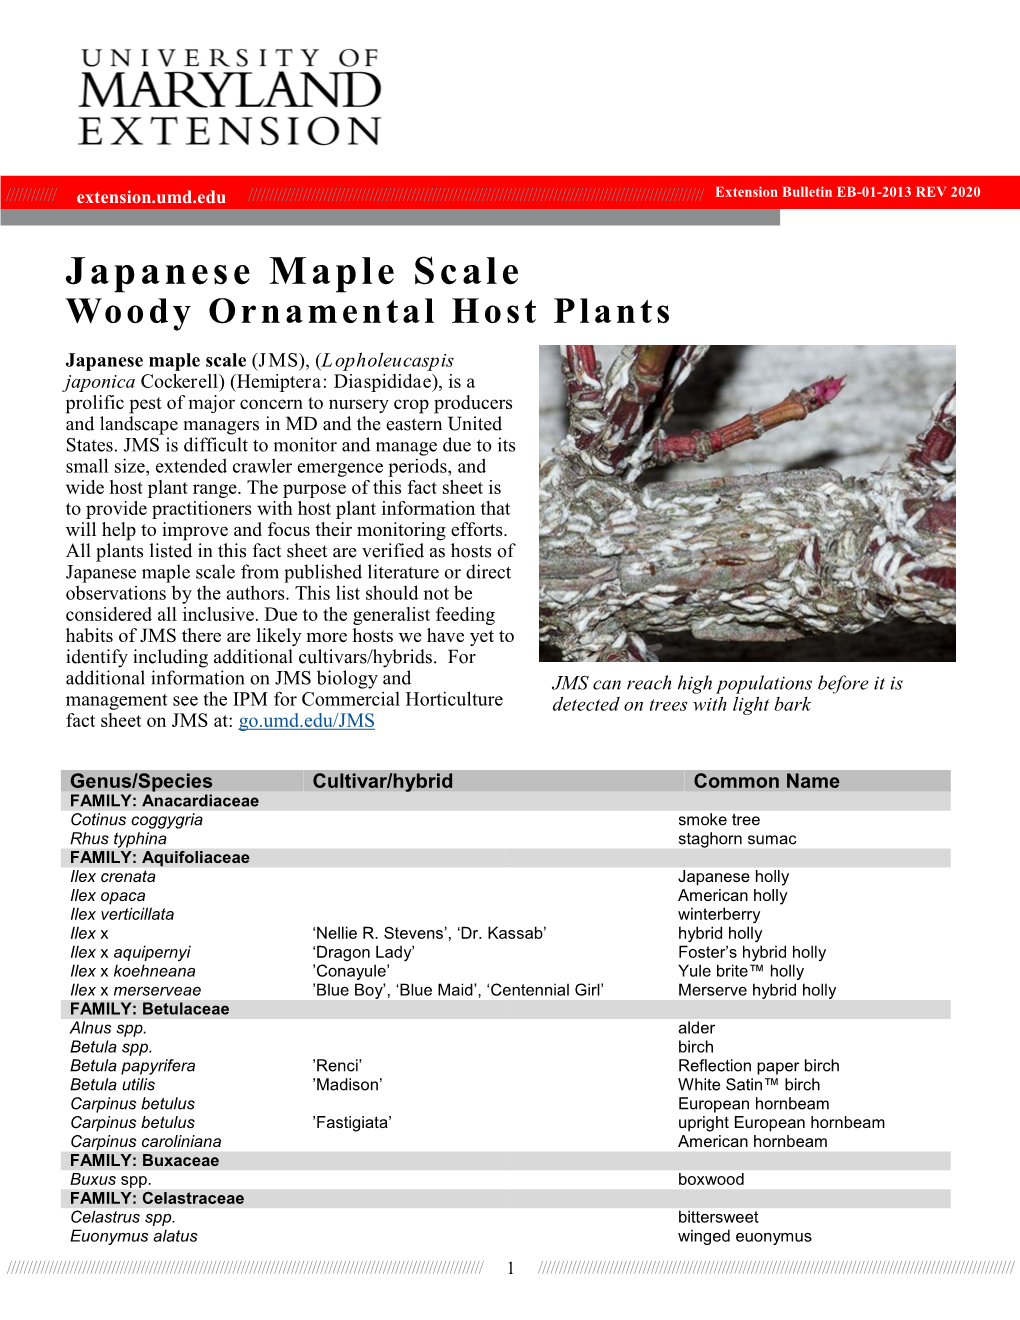 Japanese Maple Scale Woody Ornamental Host Plants